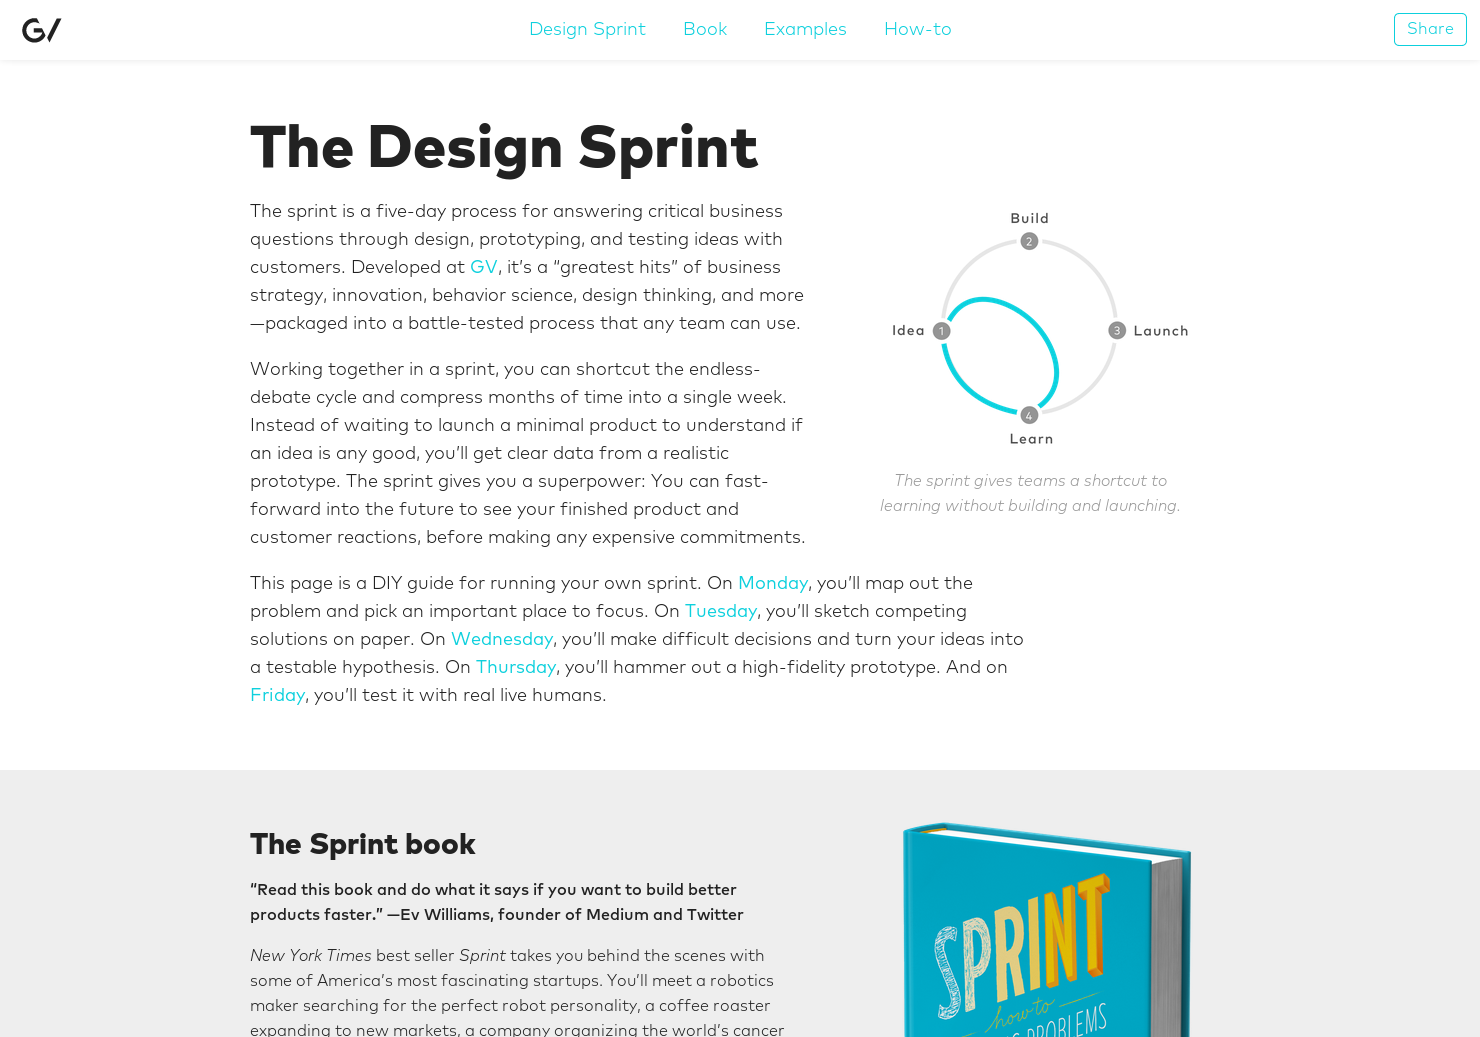 The Design Sprint